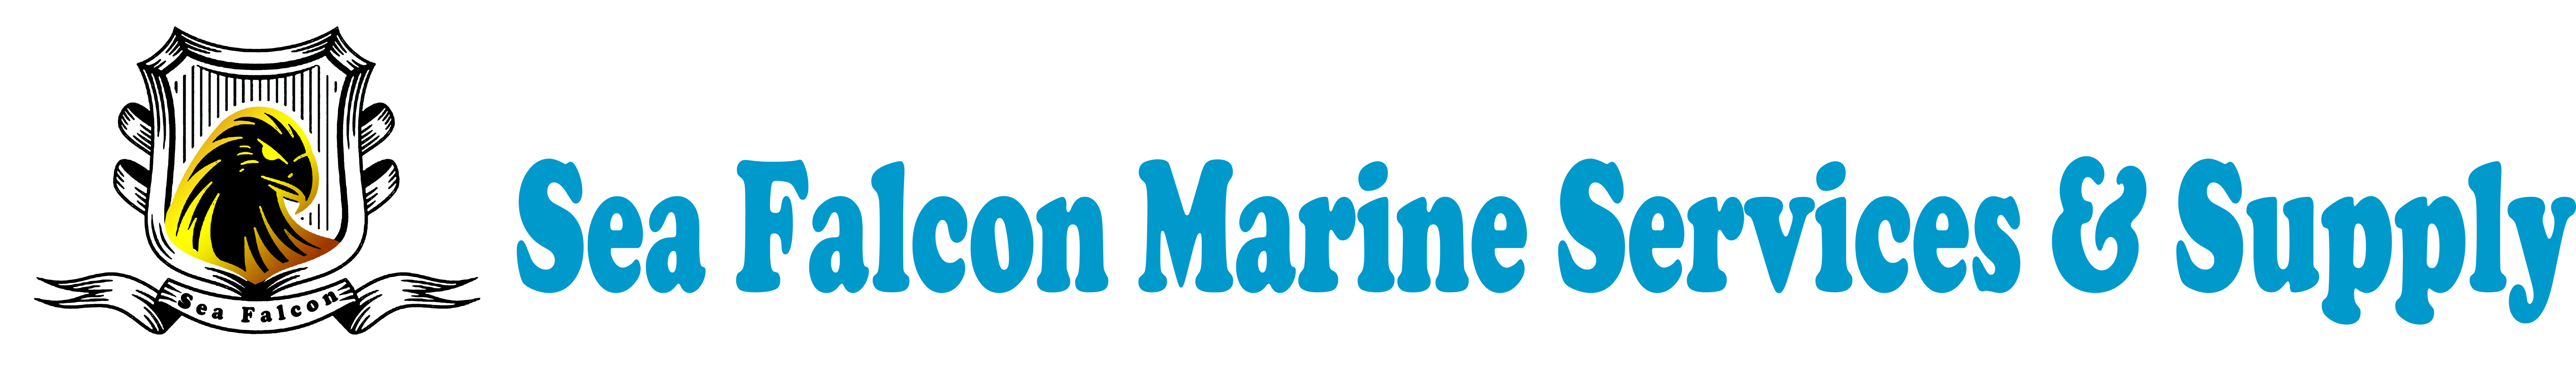 General Marine Supply – Sea Falcon